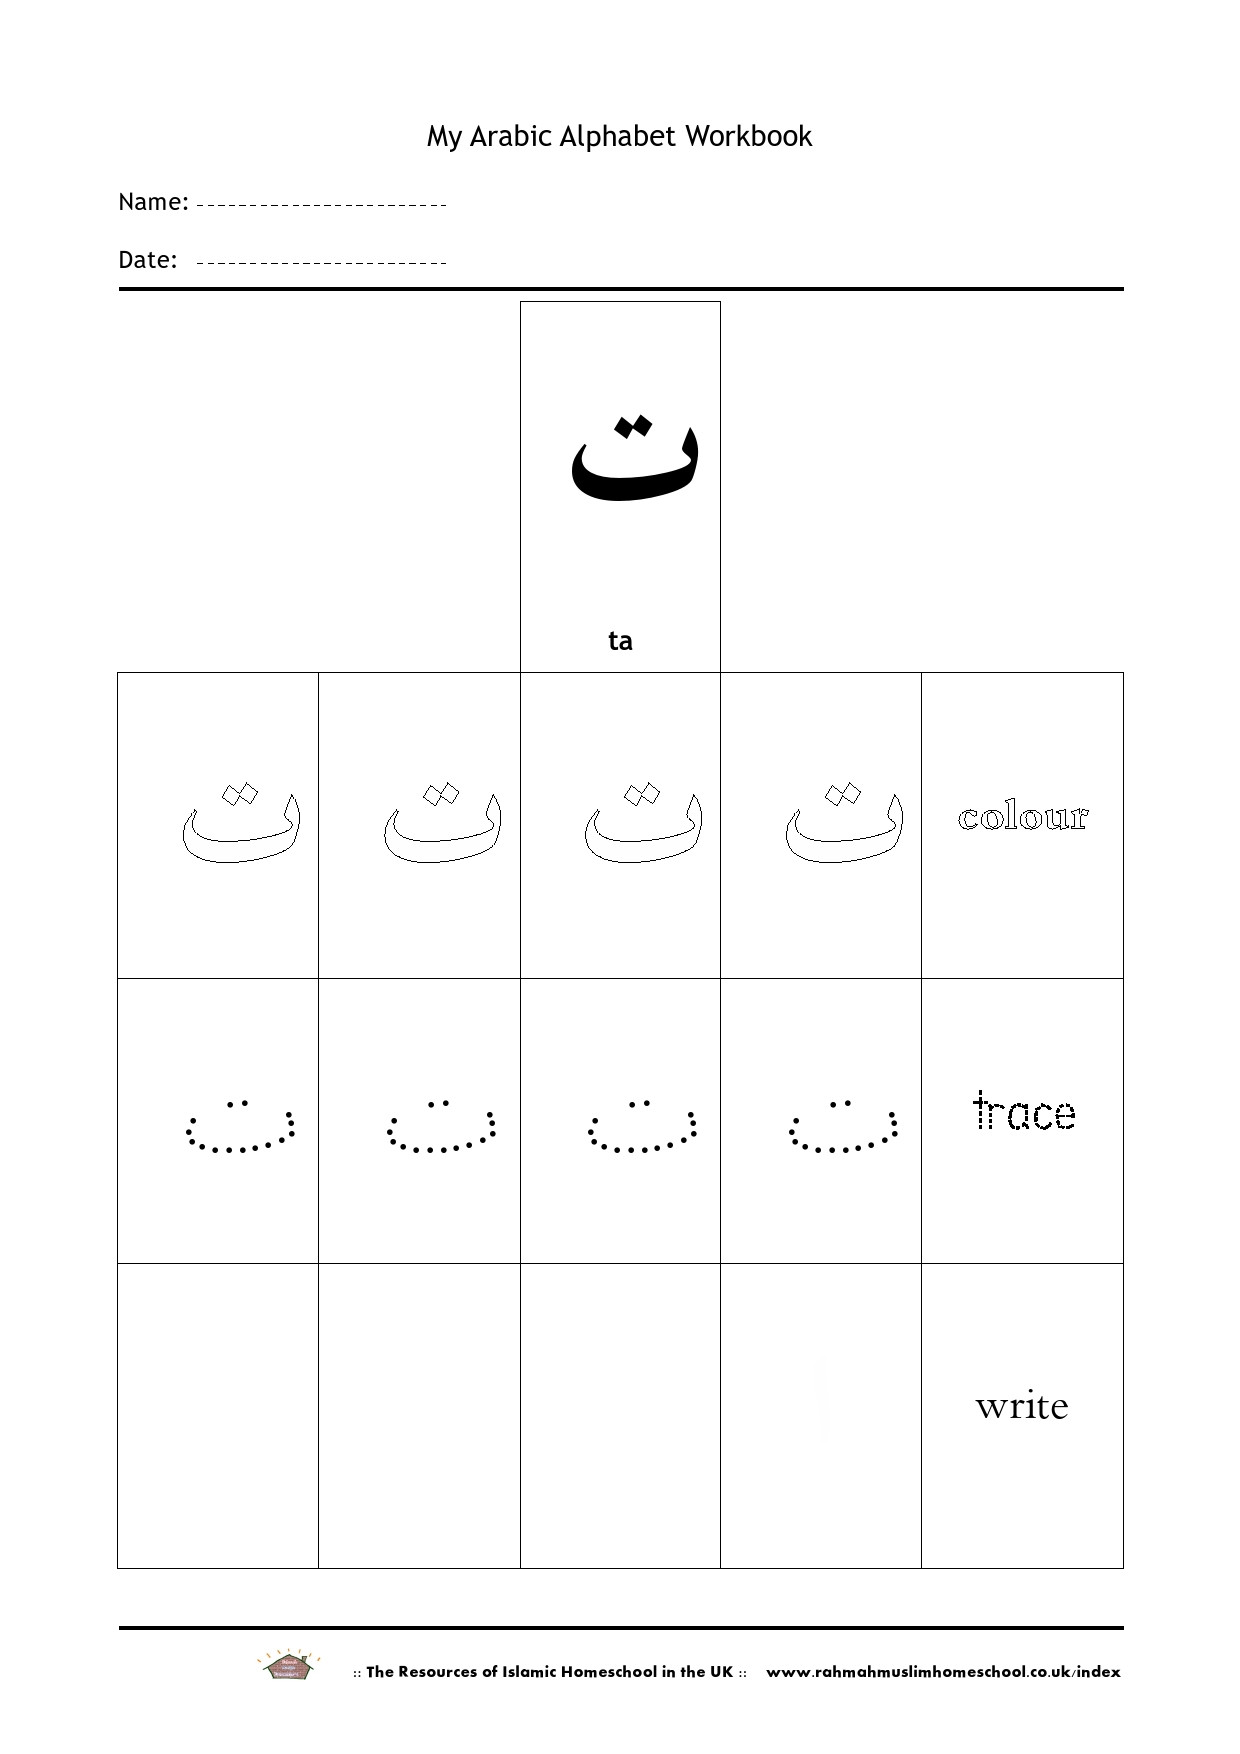 Arabic Alphabet Worksheets for Preschoolers Free Ebook My Arabic Alphabet Workbook Pt 1 Basic Arabic